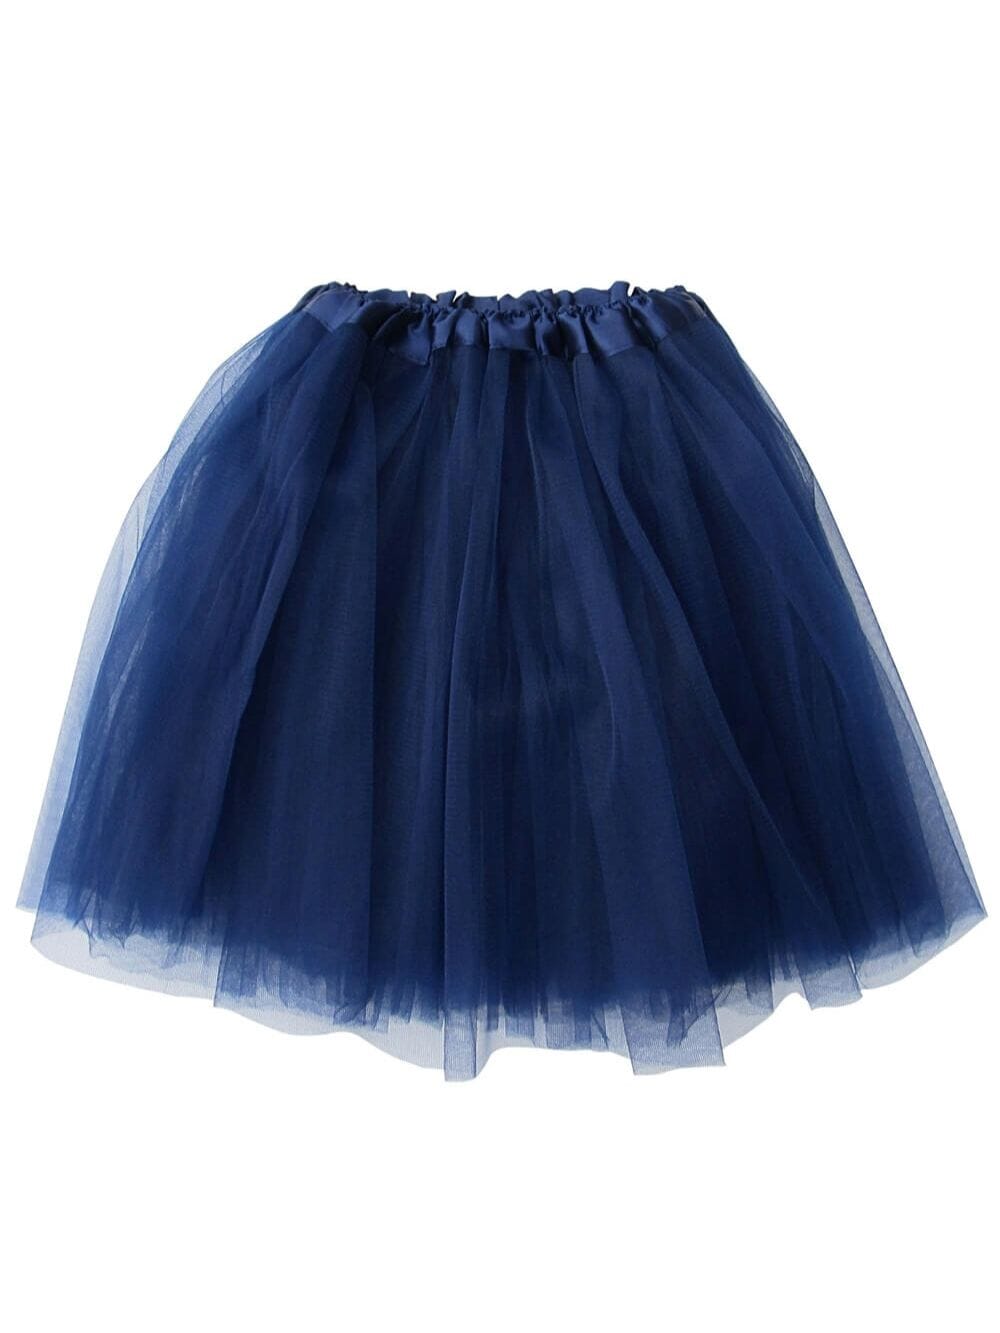 Navy Blue Plus Size Adult Tutu Skirt - Women's Plus Size 3- Layer Basic Ballet Costume Dance Tutus - Sydney So Sweet